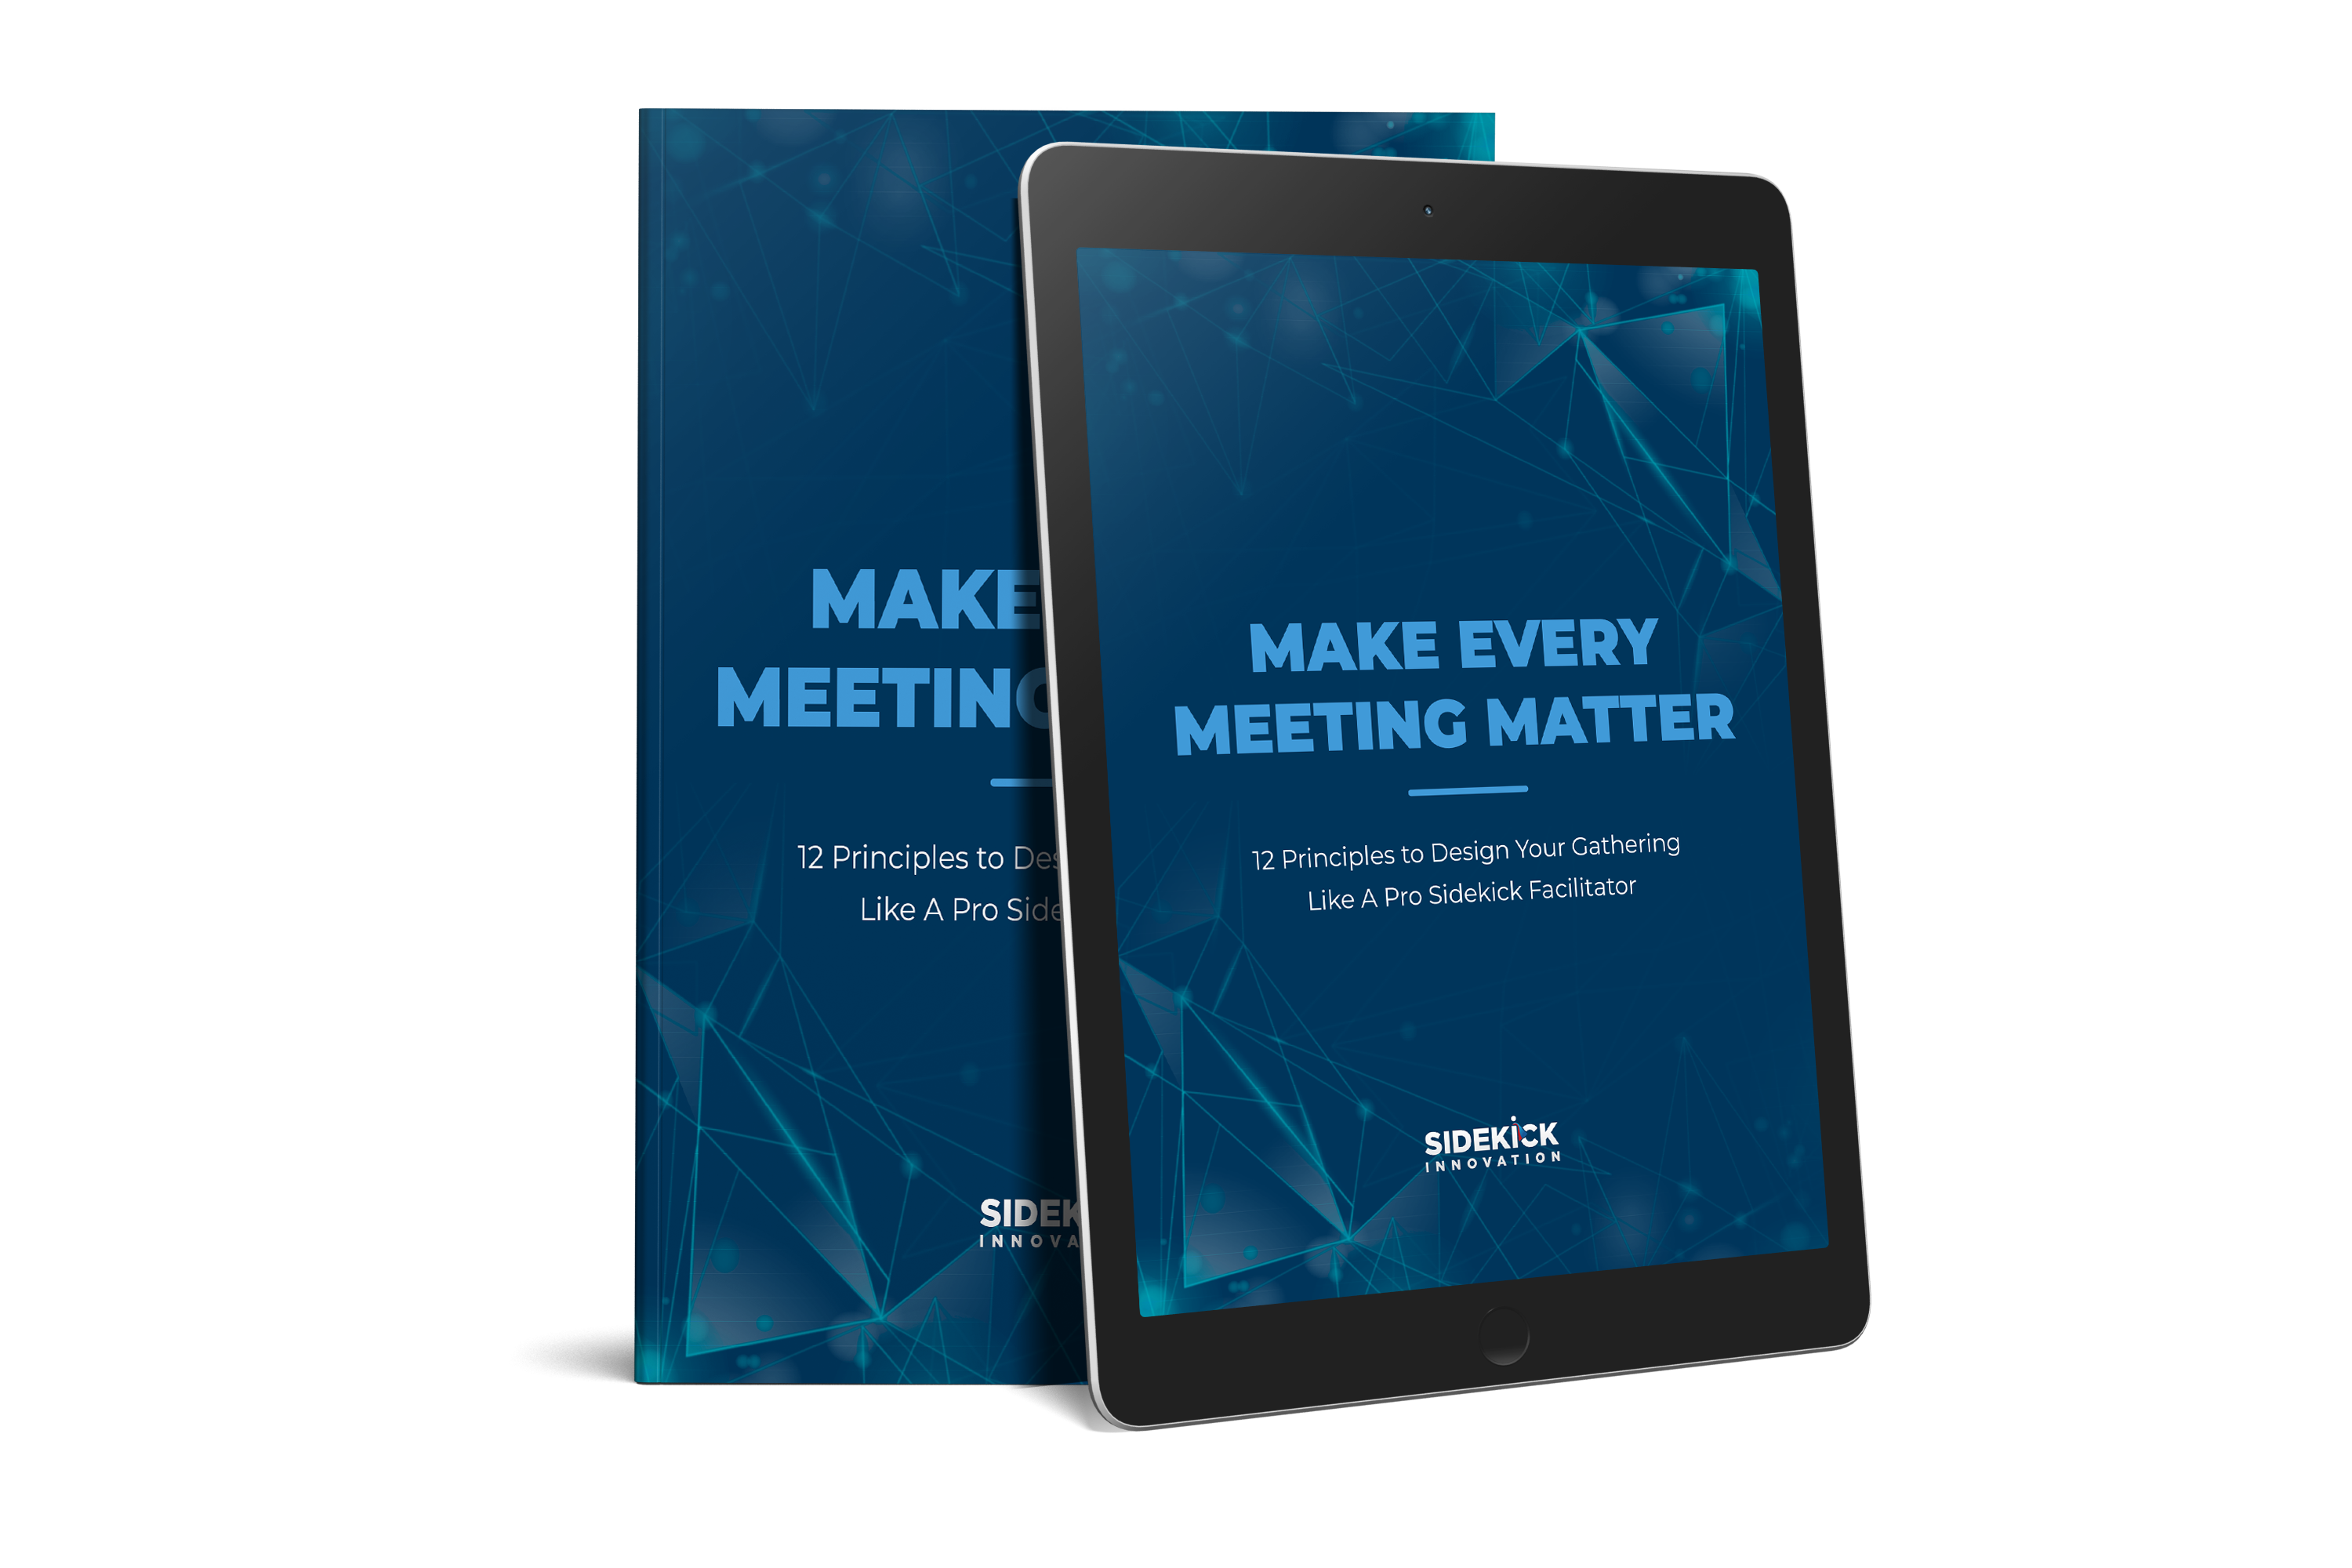 Make Every Meeting Matter mockup2